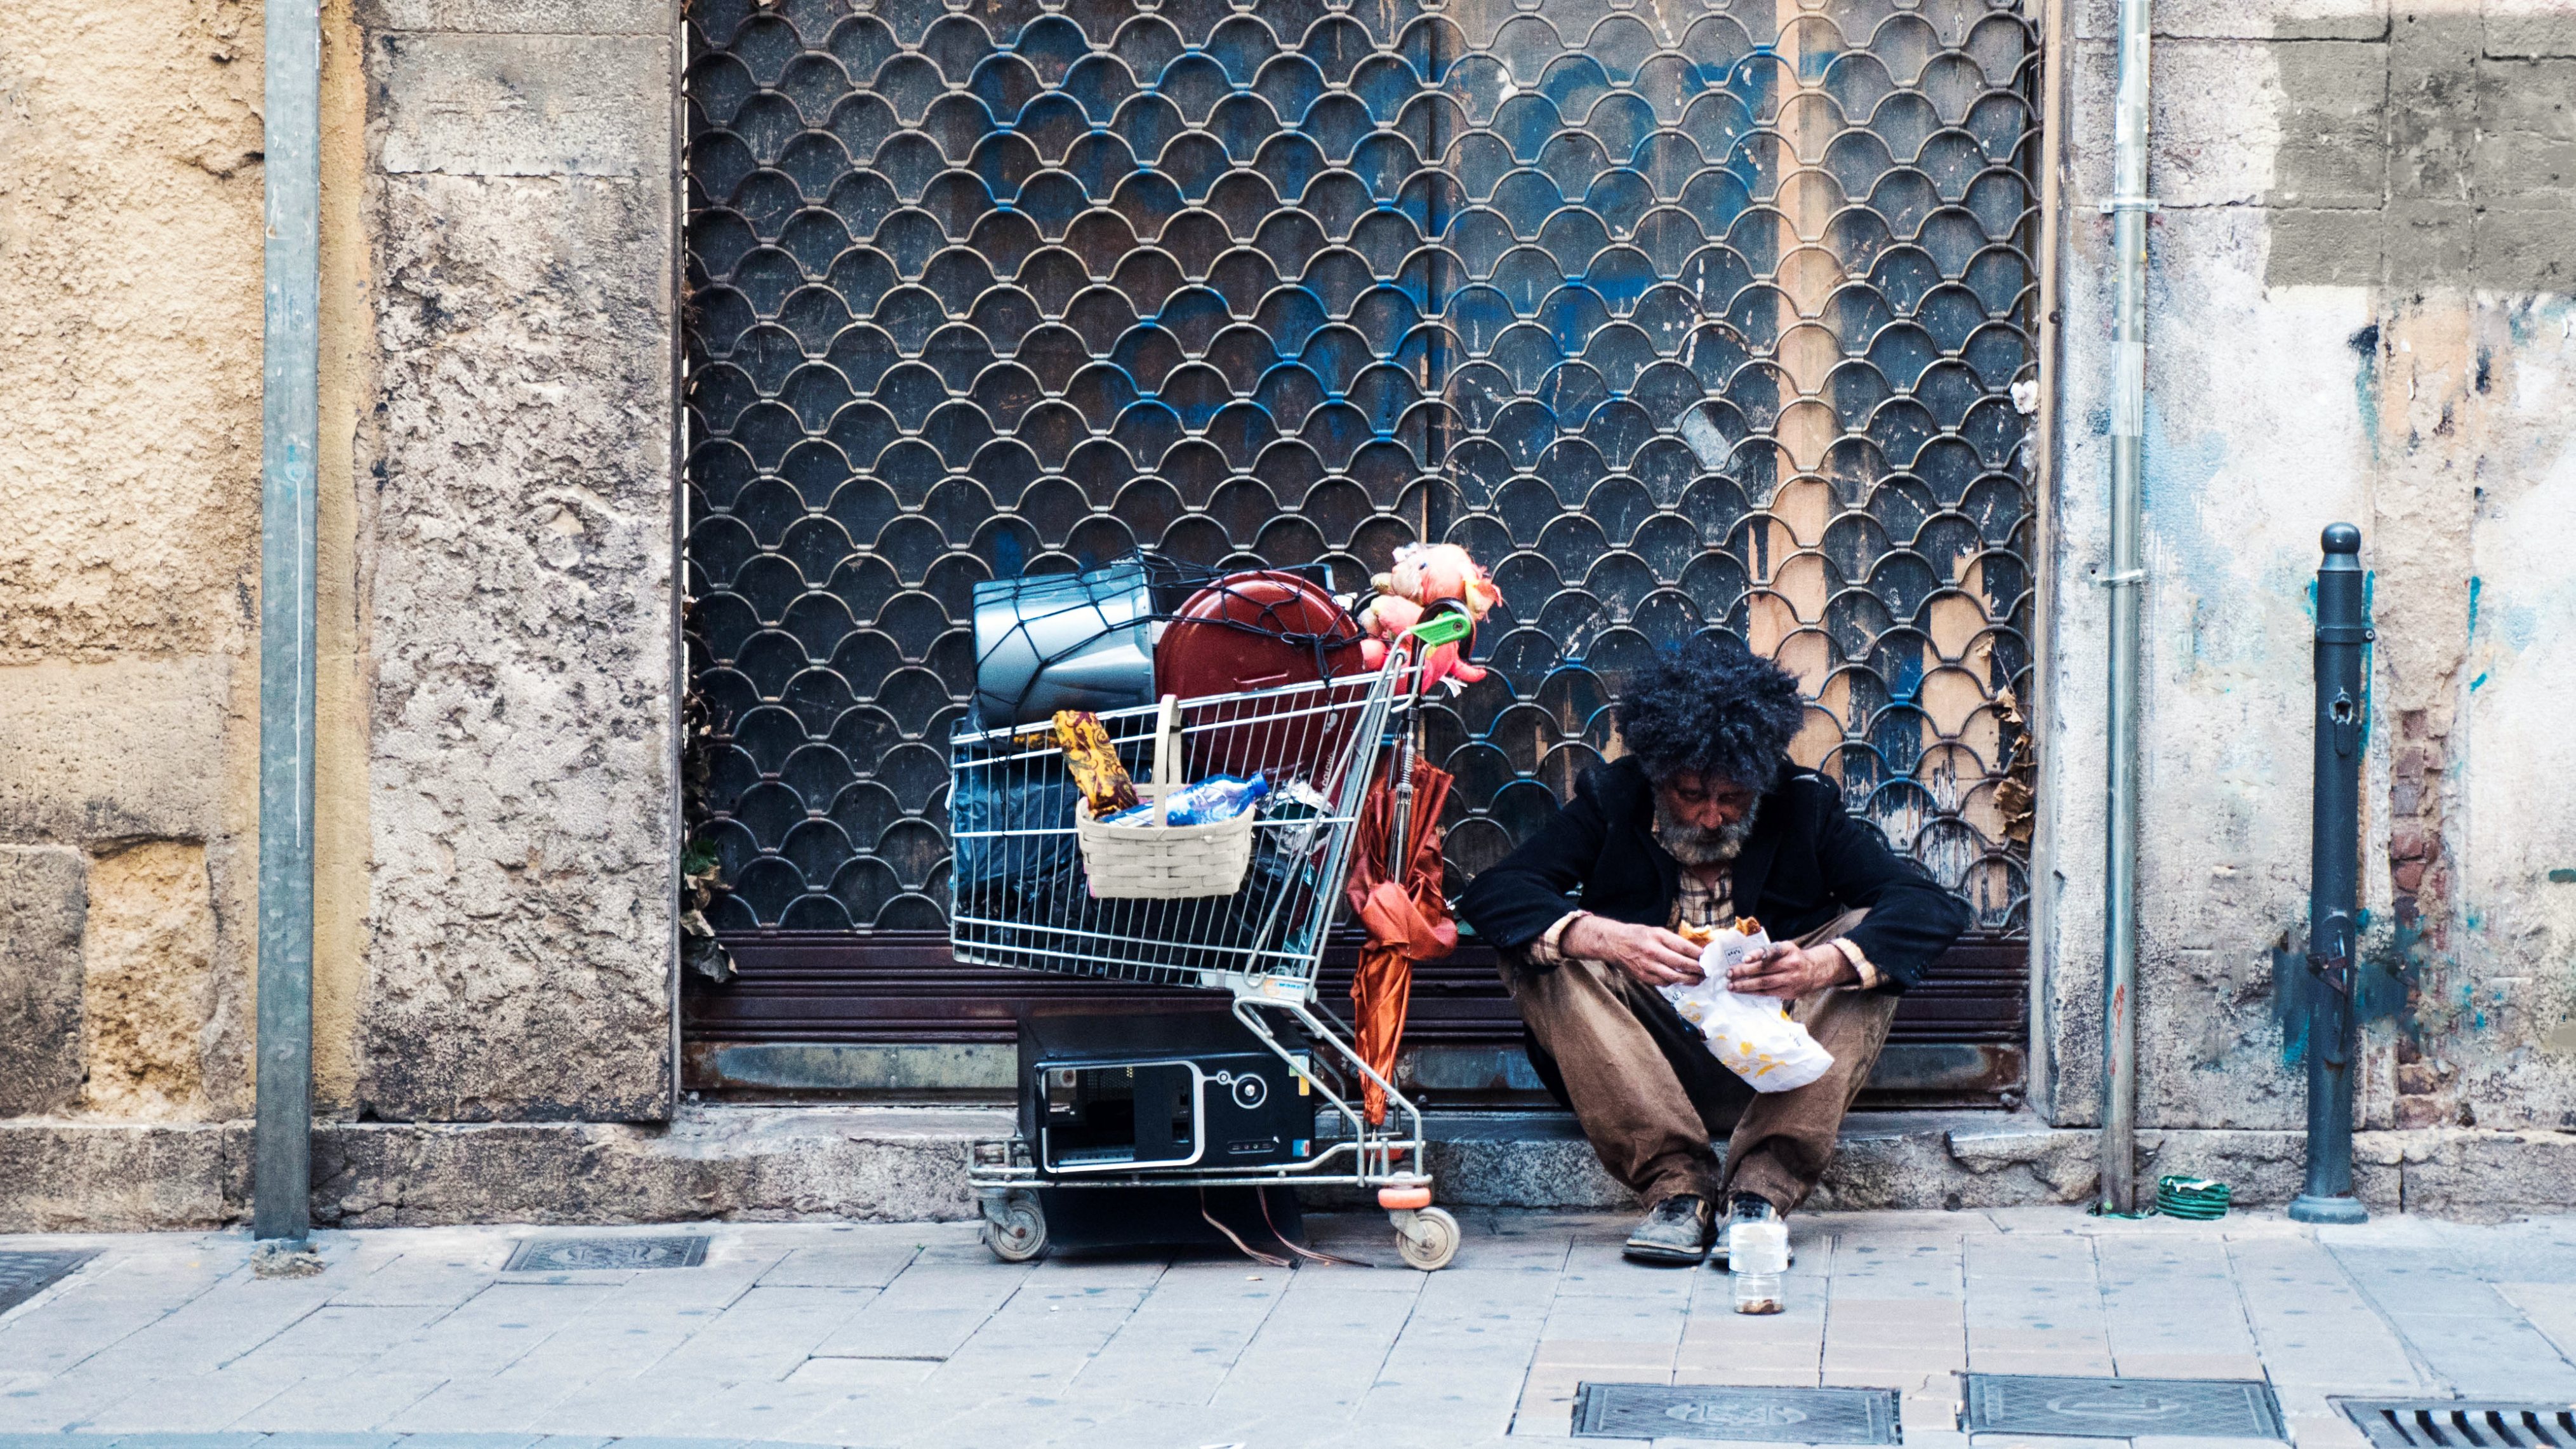 Homeless man asking for money at the street